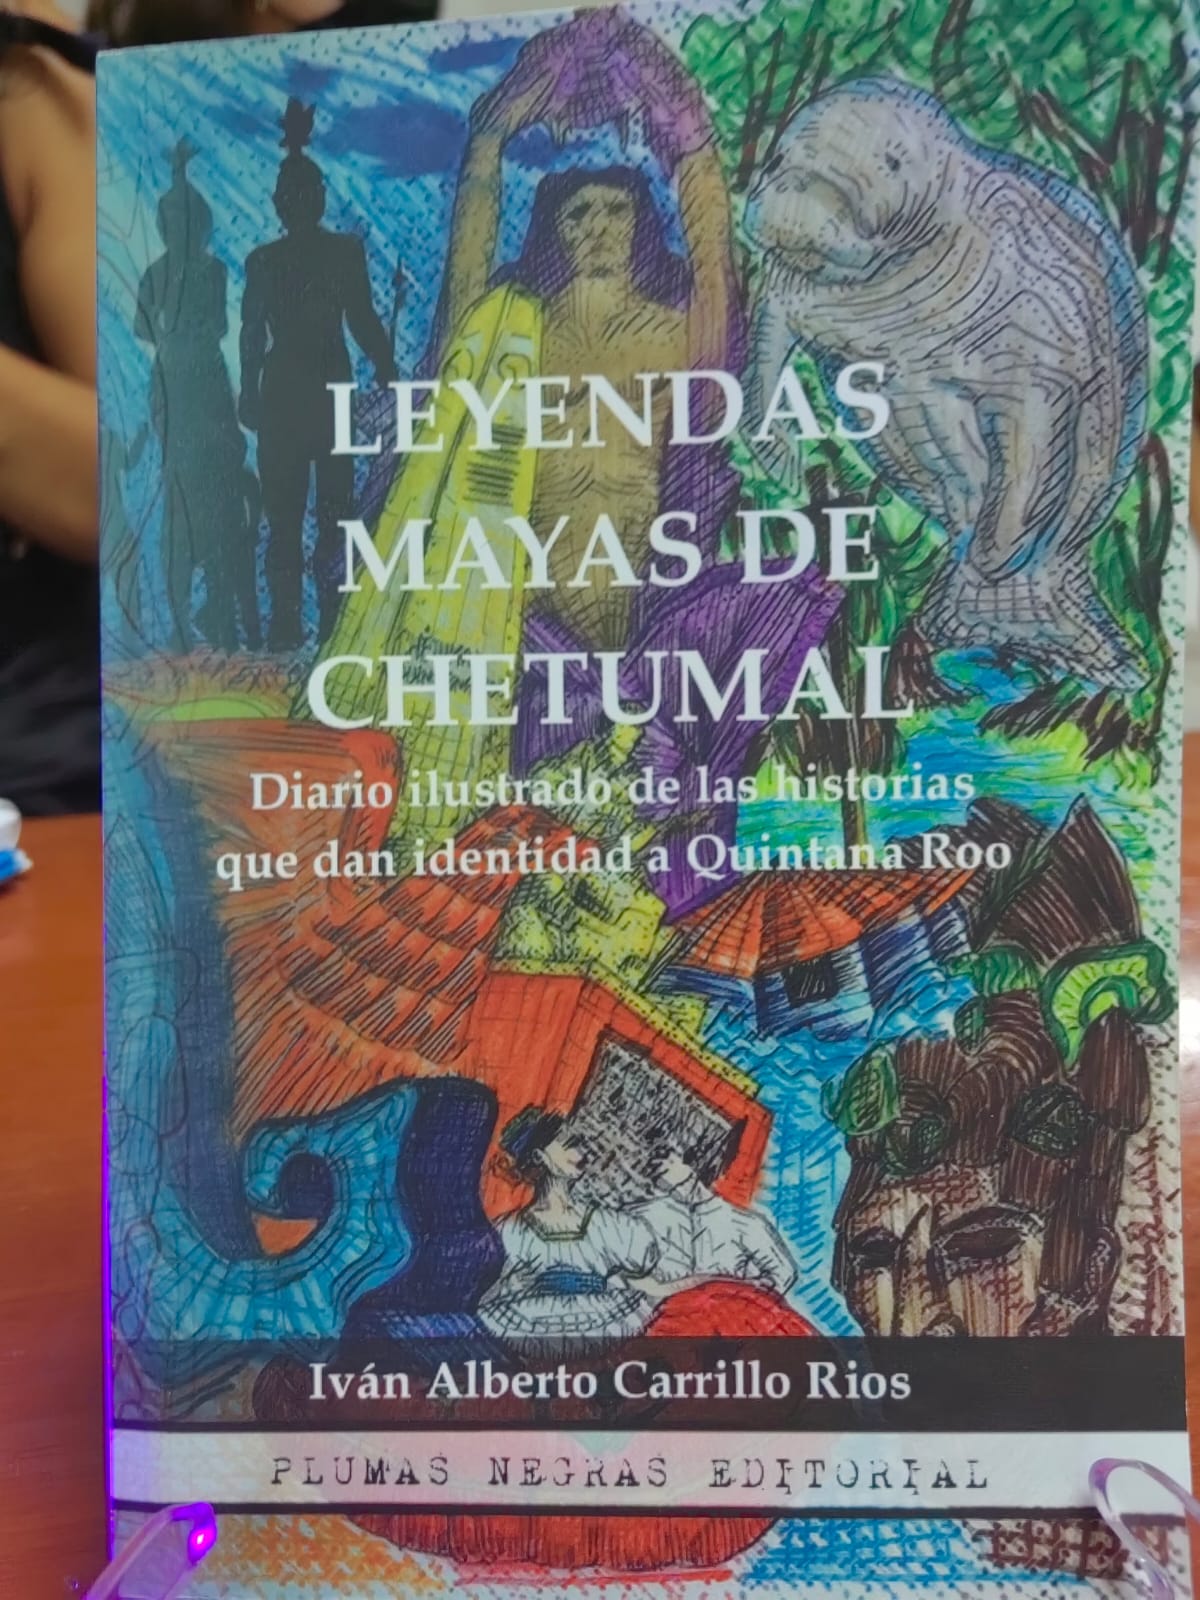 “Leyendas Mayas de Chetumal”